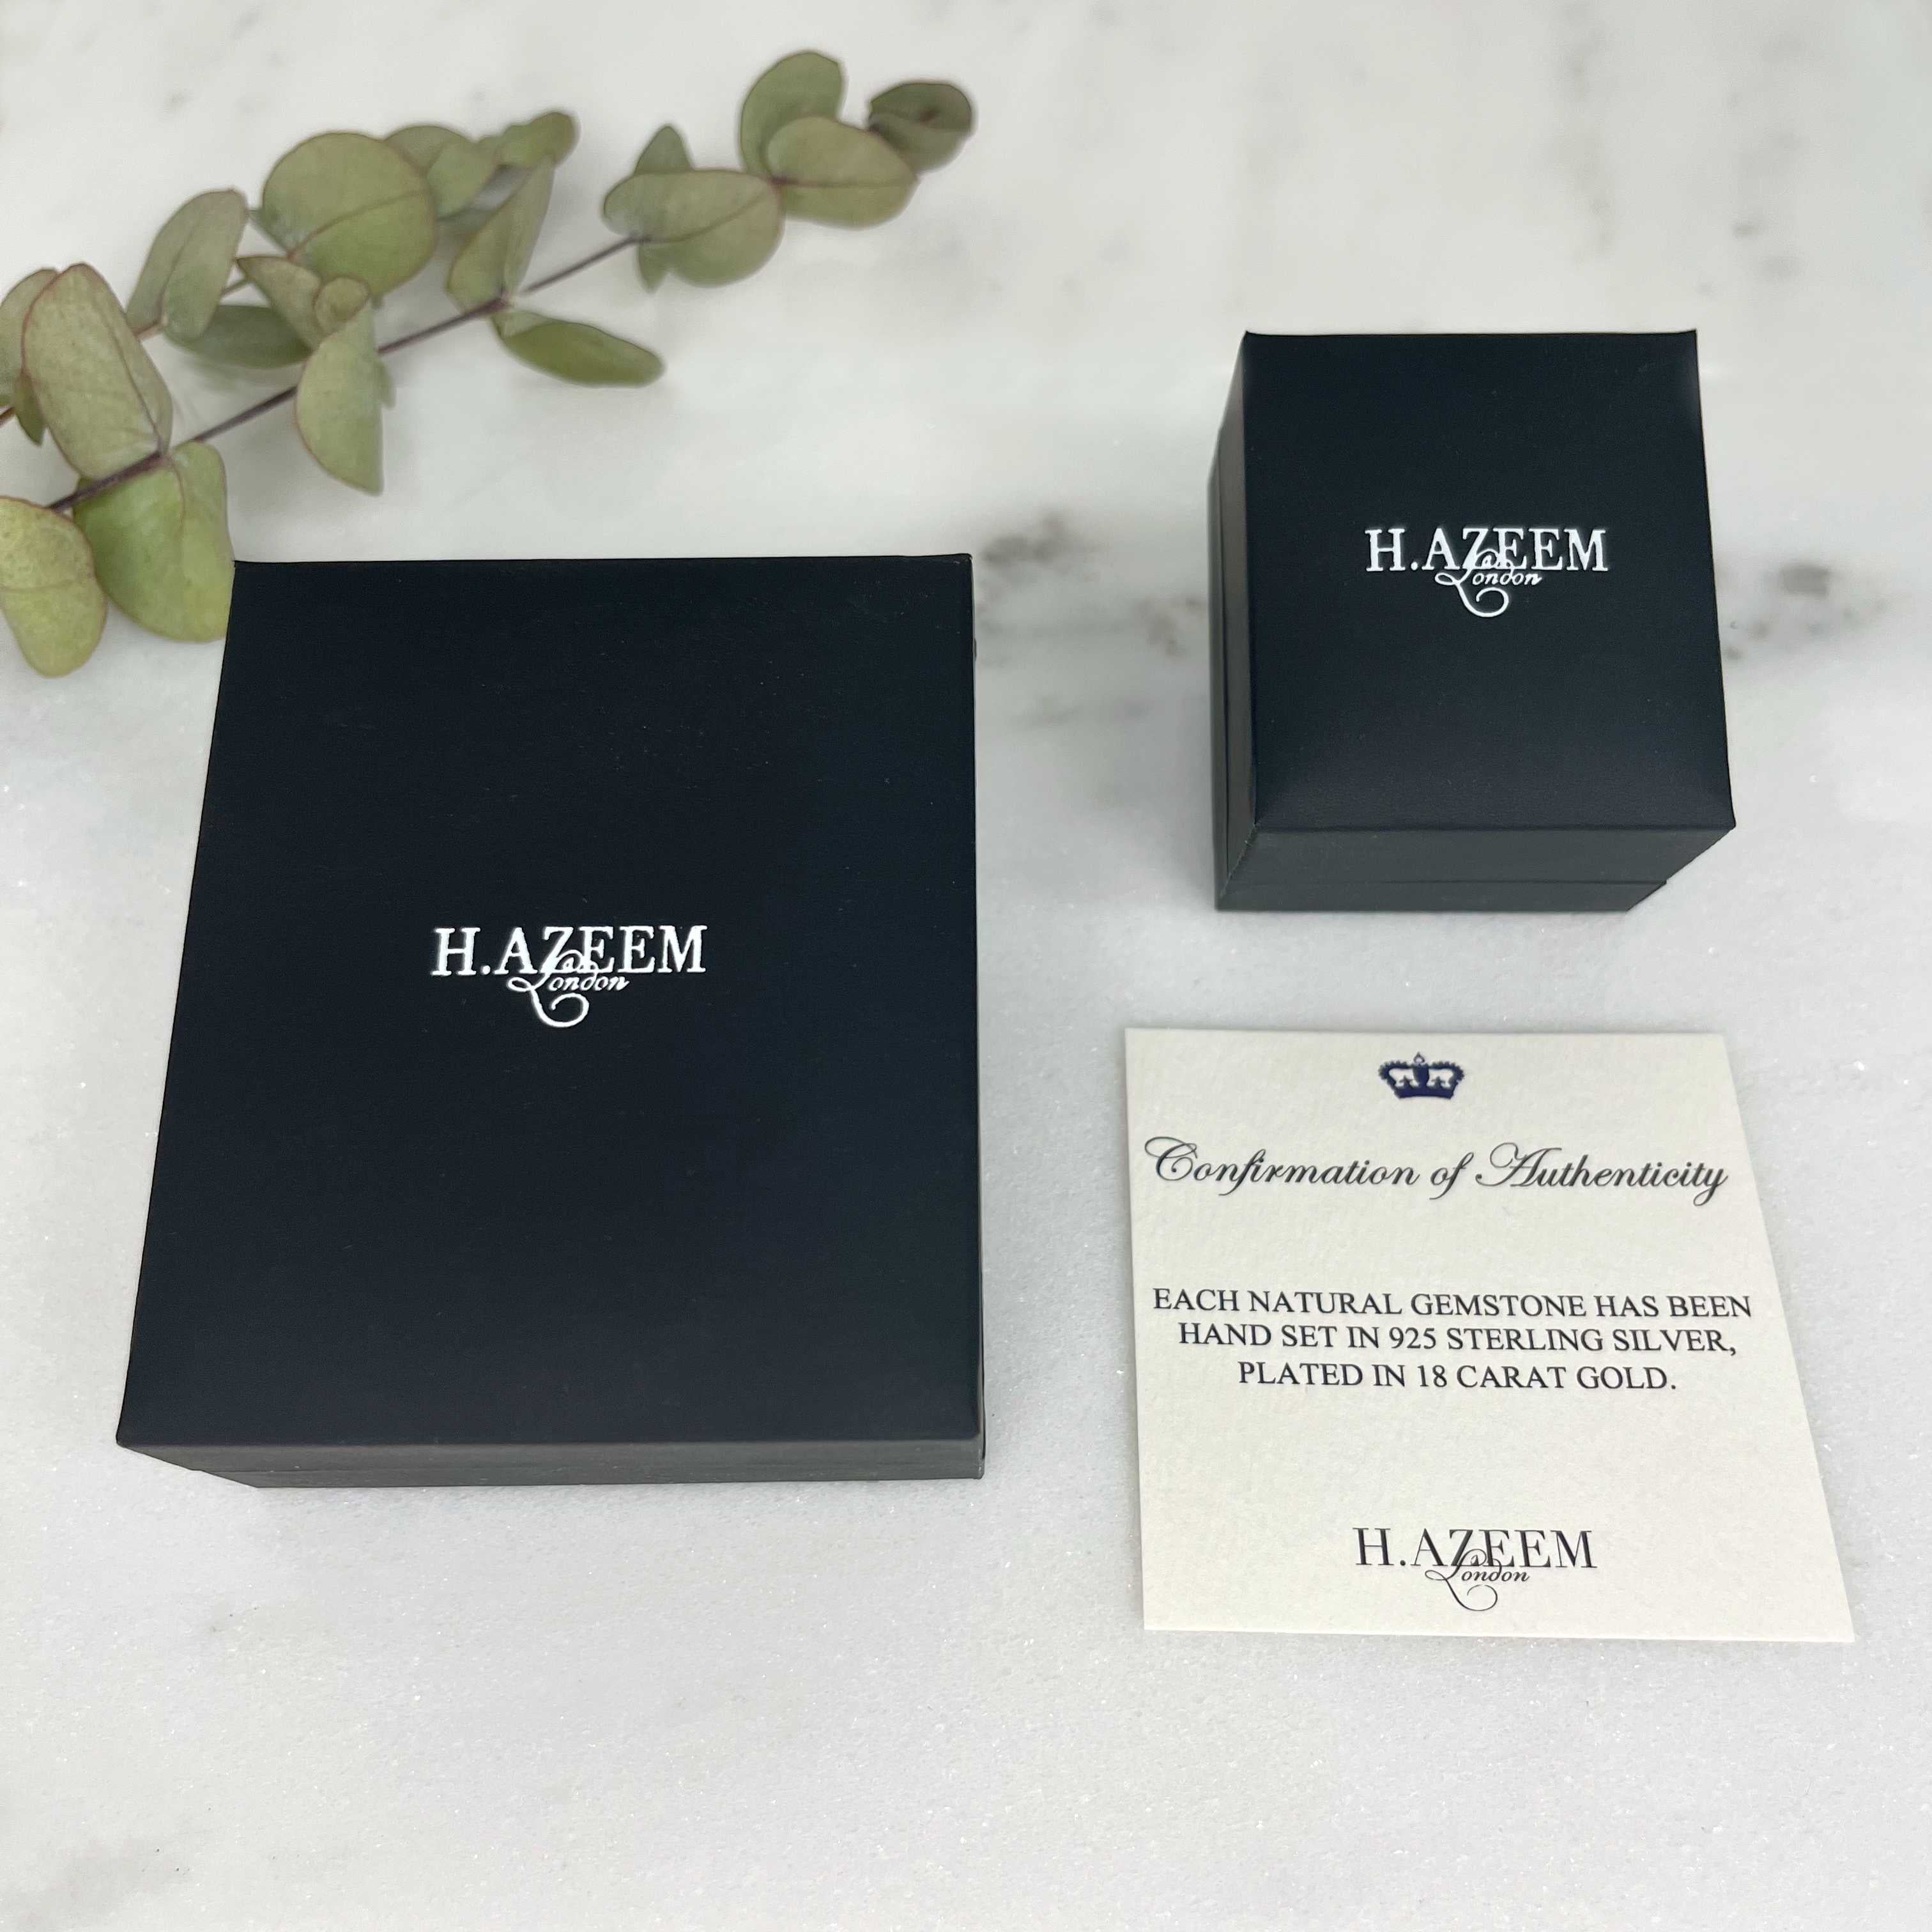 H.AZEEM London jewellery box and warranty card